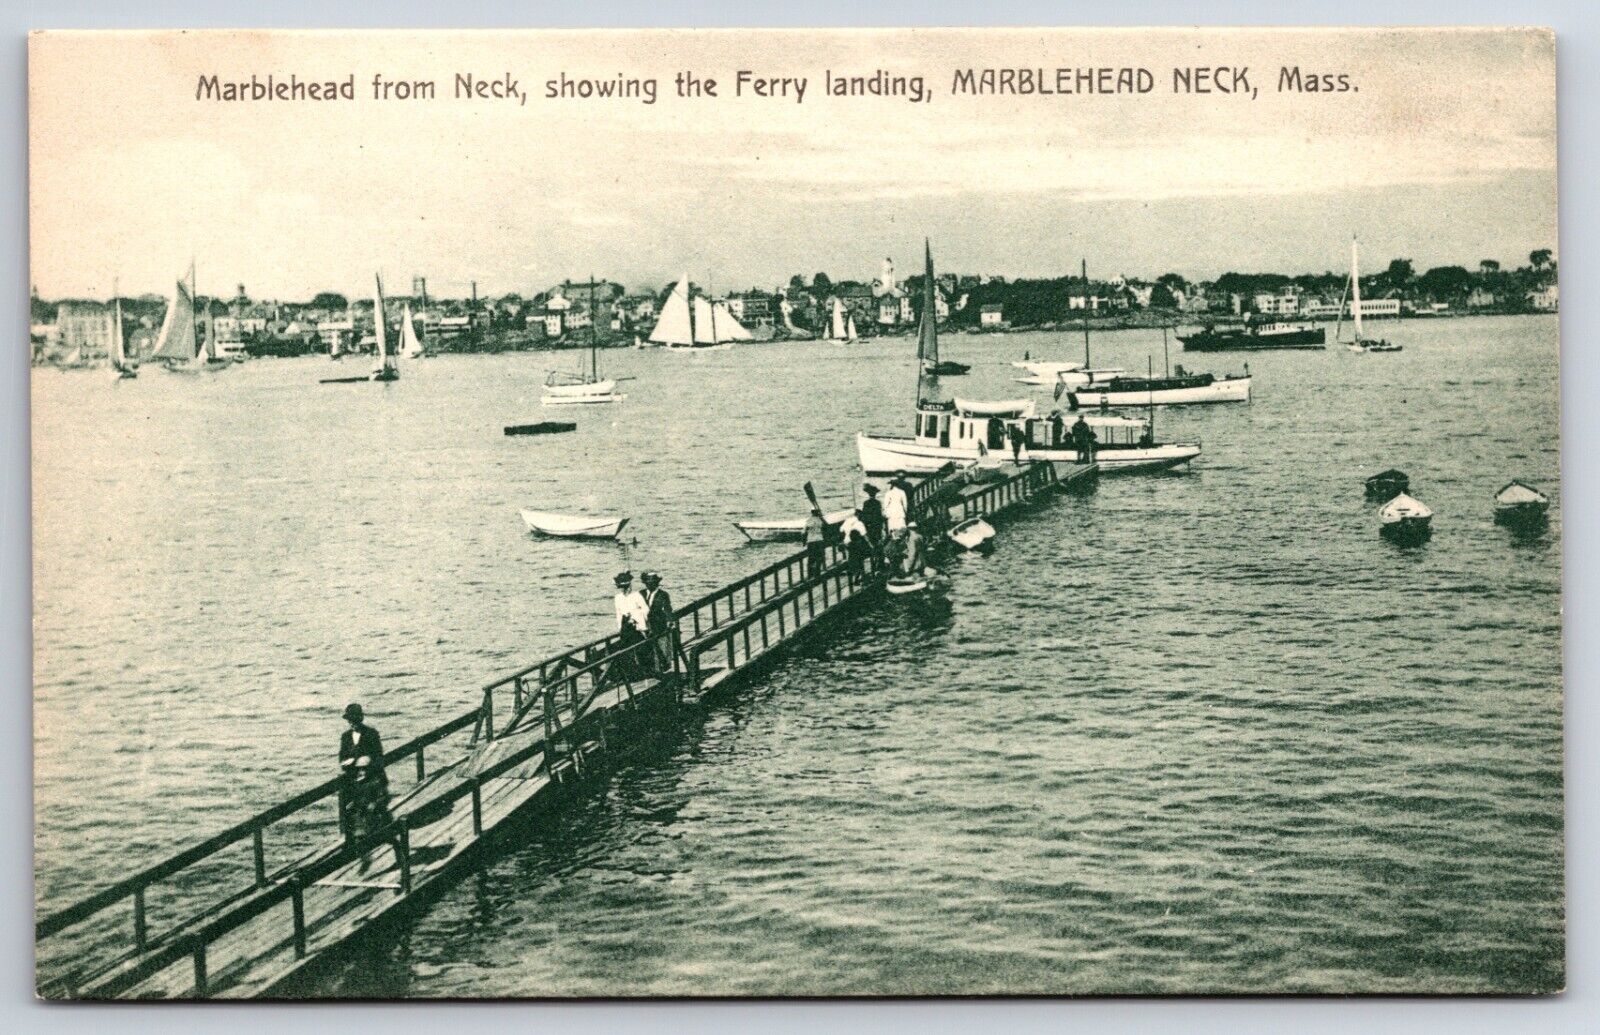 Ferry Landing Marblehead Neck Massachusetts MA Sailboats Boats Vintage Poscard